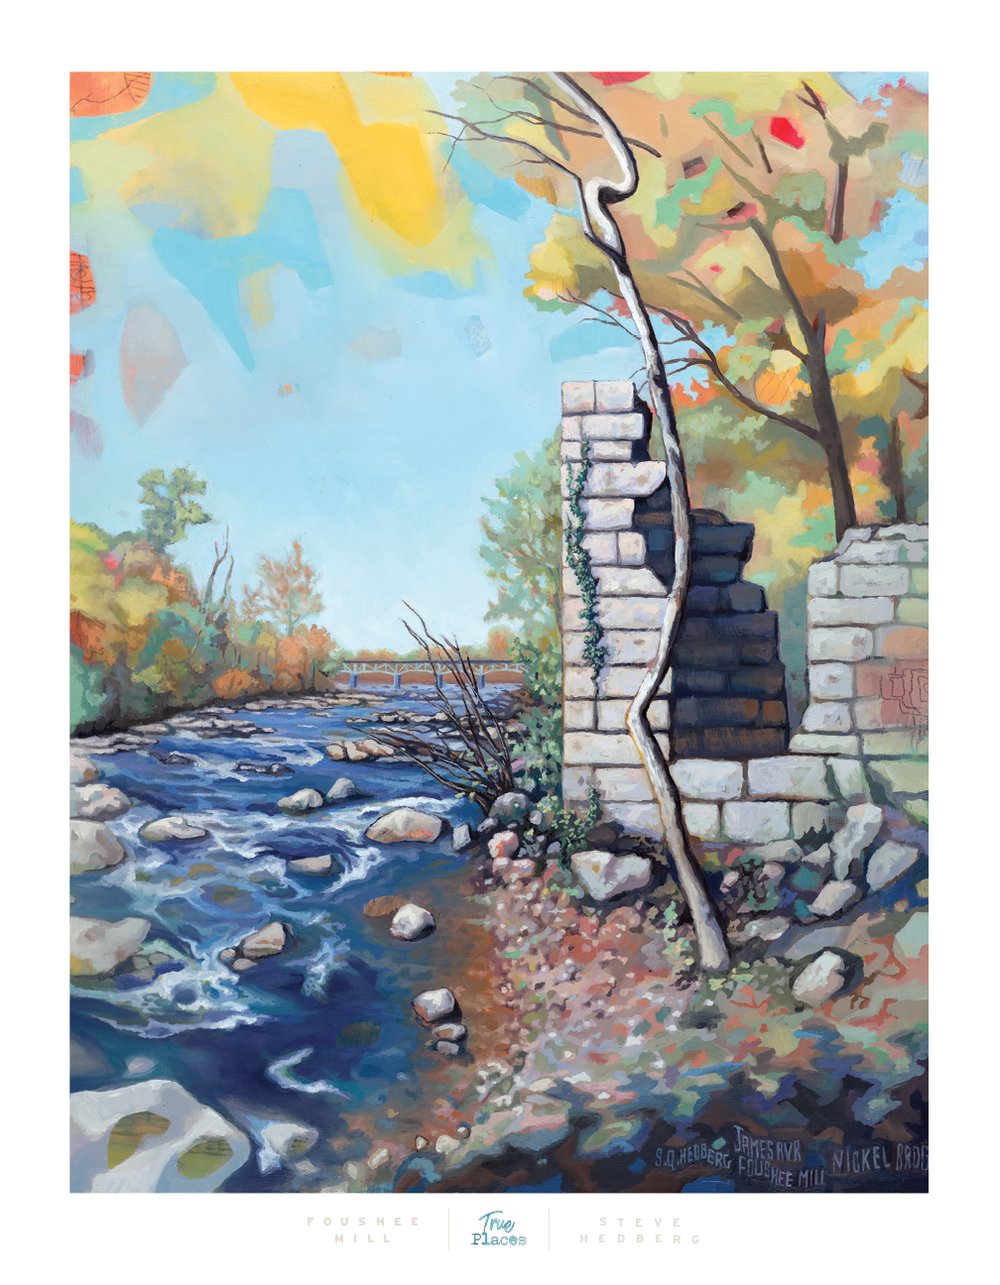 Image of Foushee Mill by Steve Hedberg, Limited Release Fine Art Print 